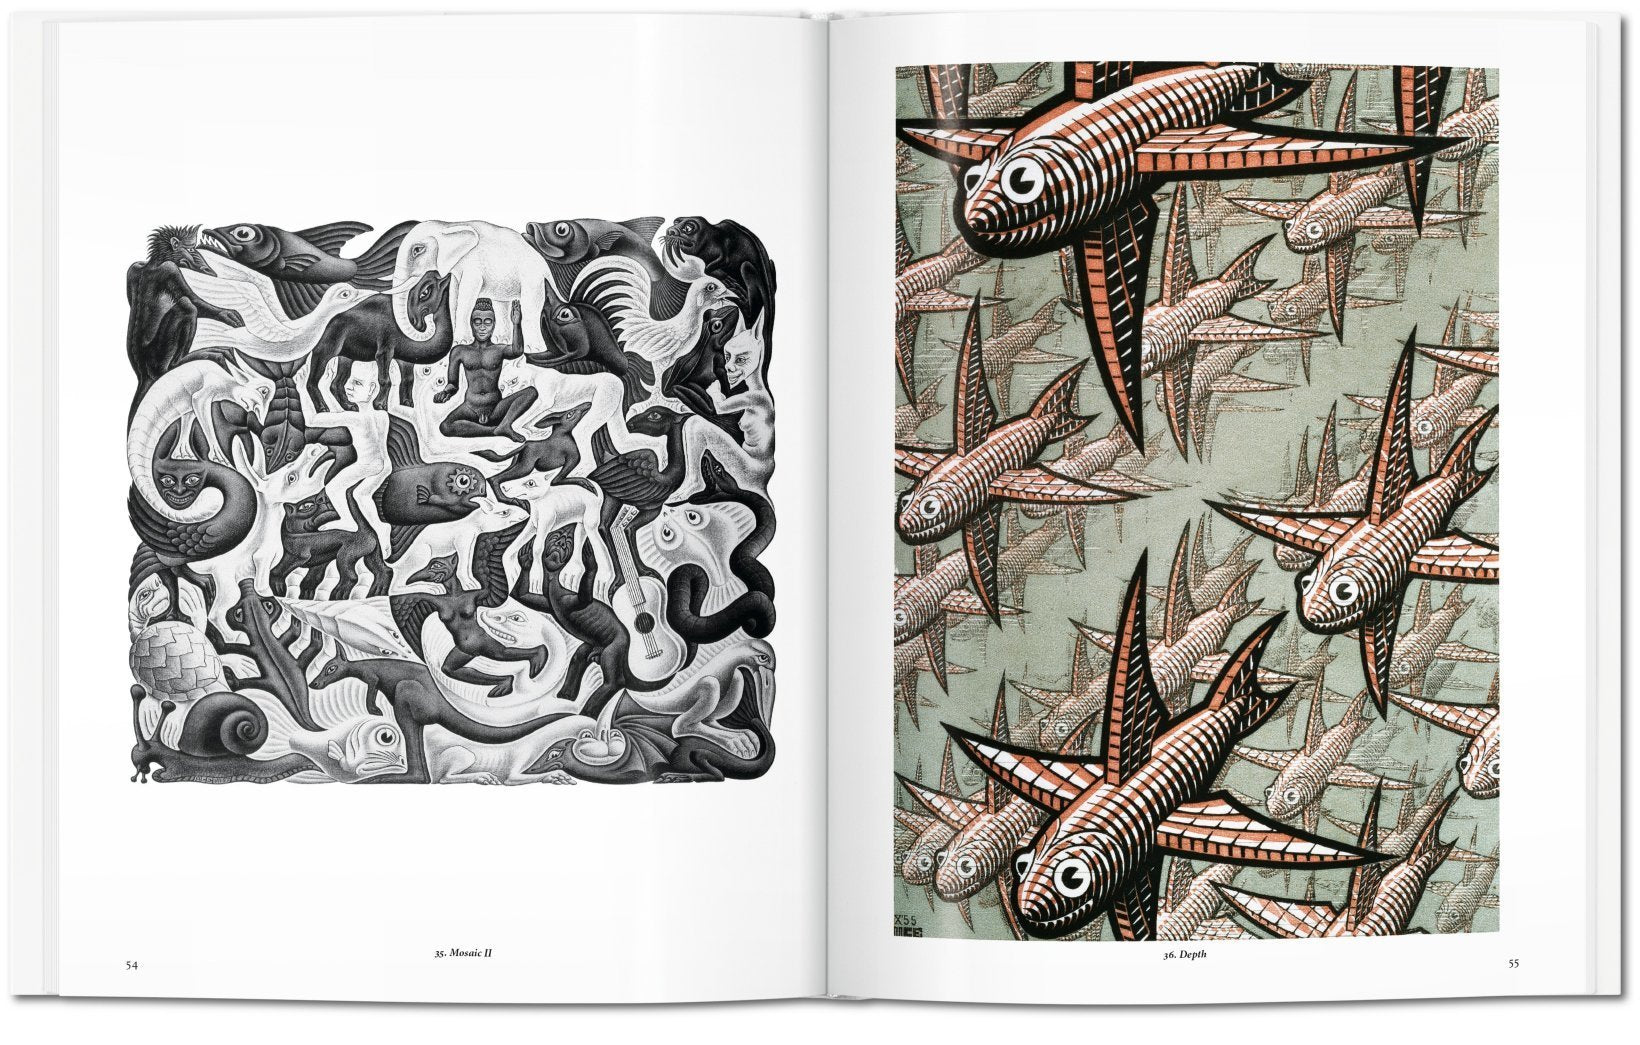 M. C. Escher: The Graphic Work – Chrysler Museum of Art